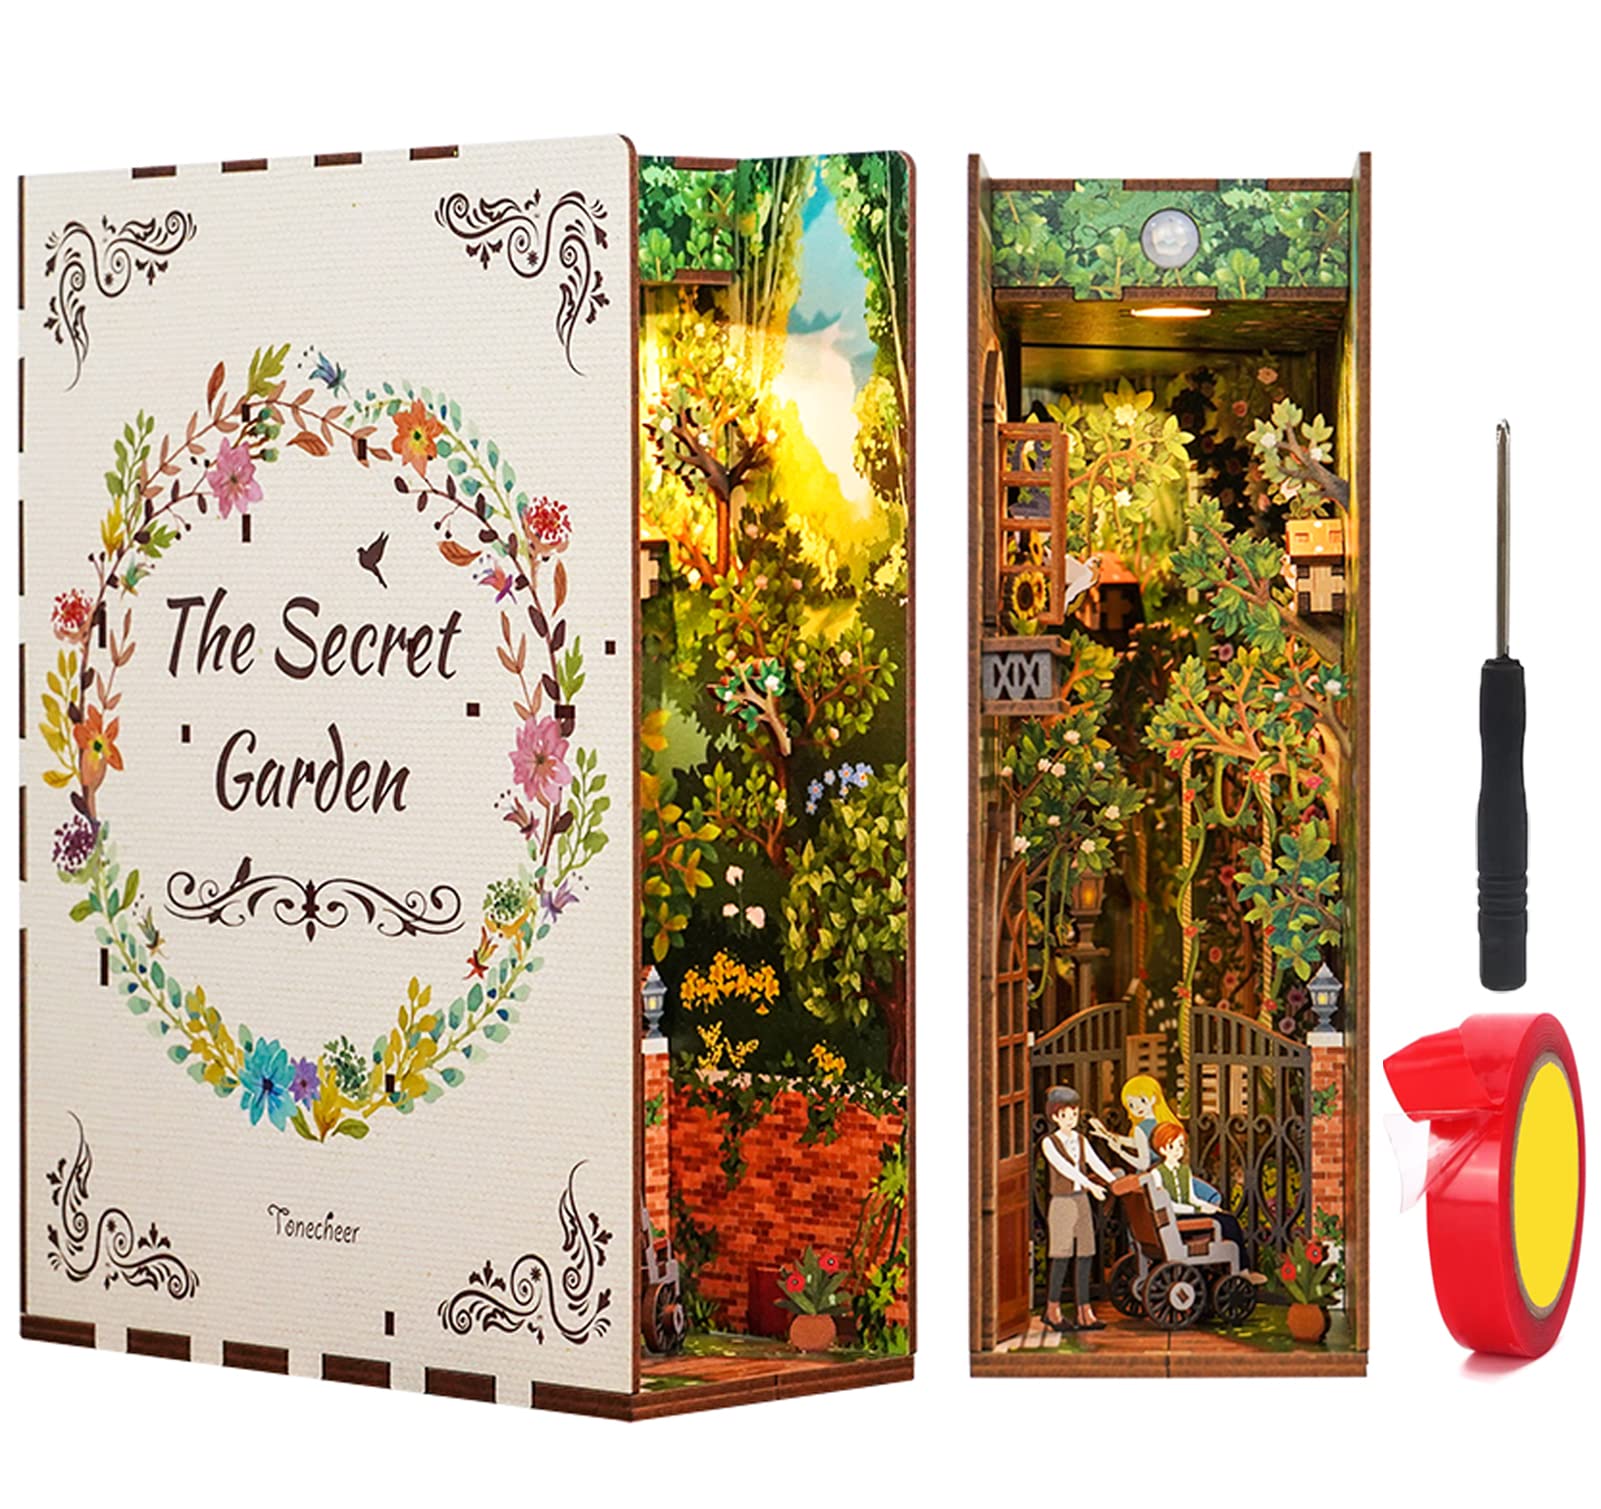 SPILAY DIY Dollhouse Miniature Book Nook Assemble Kit,3D Wooden Puzzle Bookshelf Insert Decor with Sensor Light,Bookends Model Build-Creativity Kit for Adults Birthday Gift (The Secret Garden)